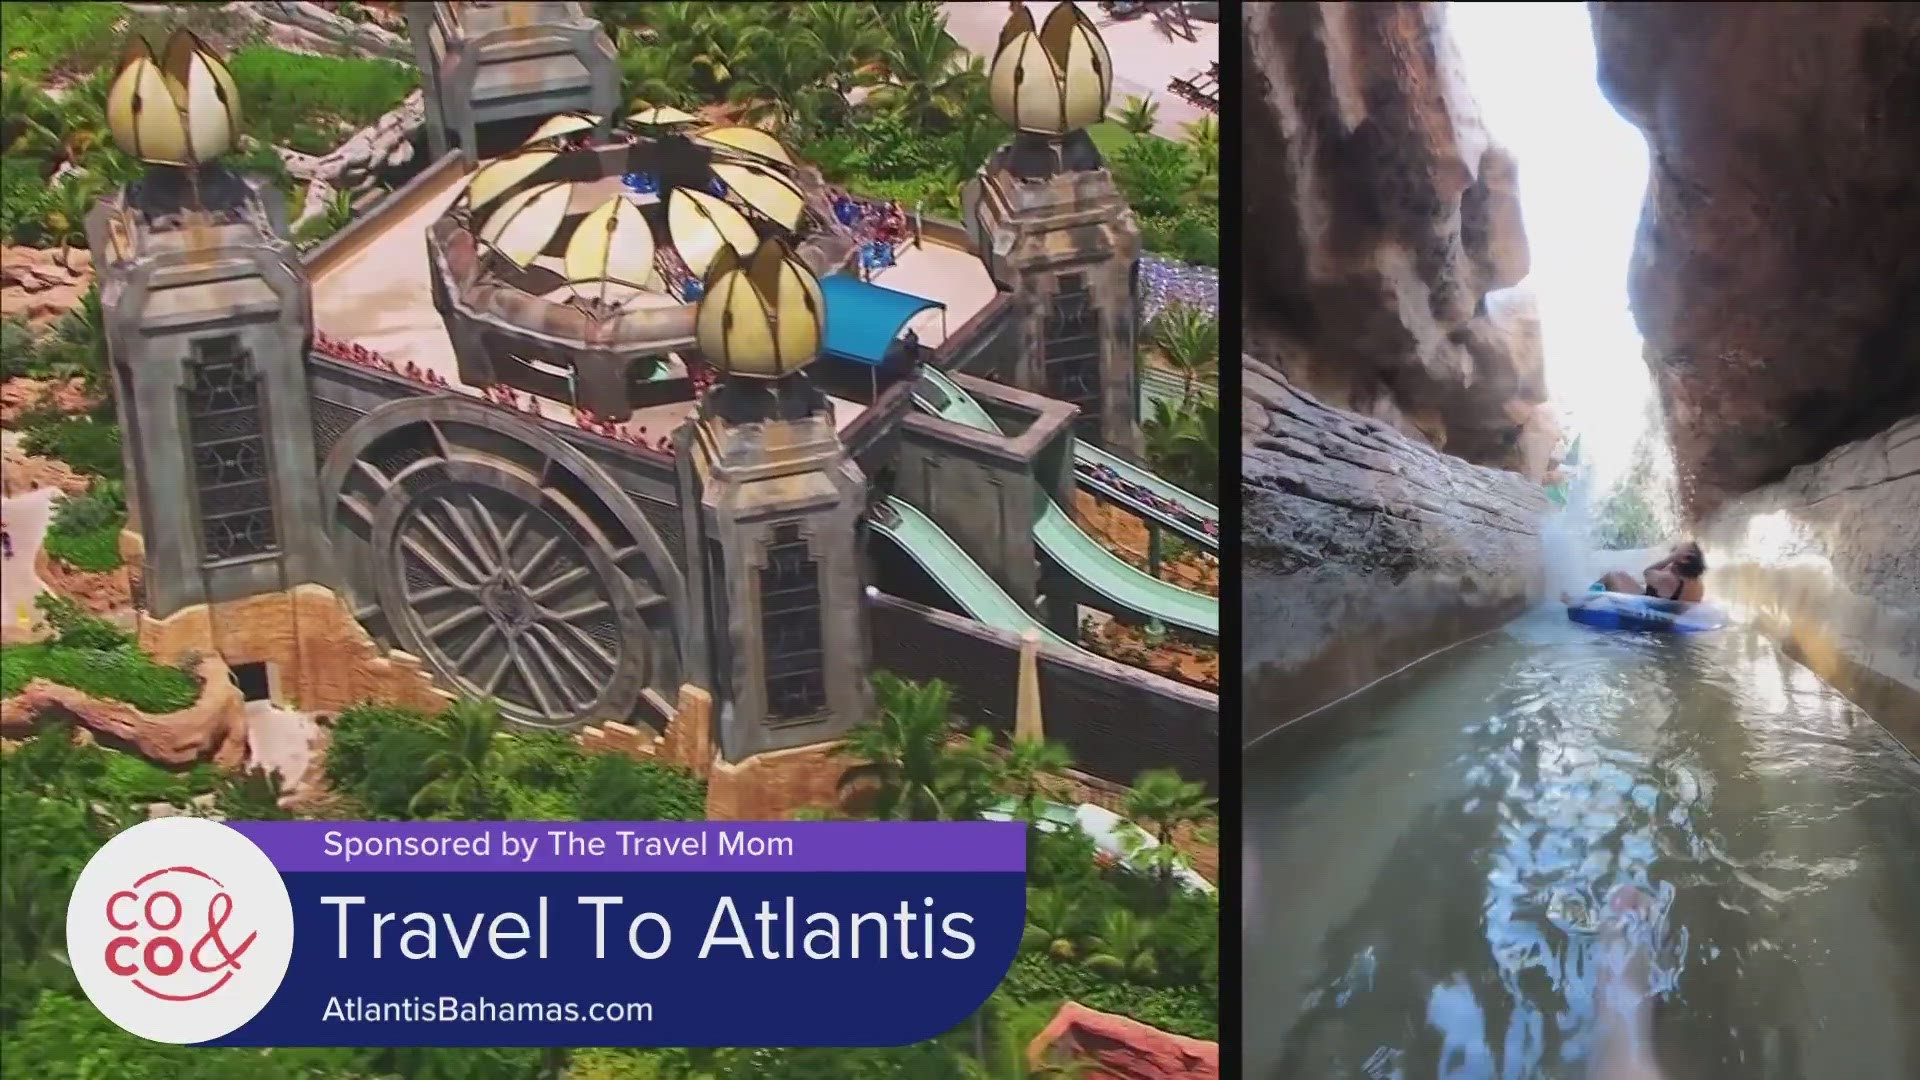 Follow Emily on social and at TheTravelMom.com. For more on Atlantis Resort, visit AtlantisBahamas.com. **PAID CONTENT**